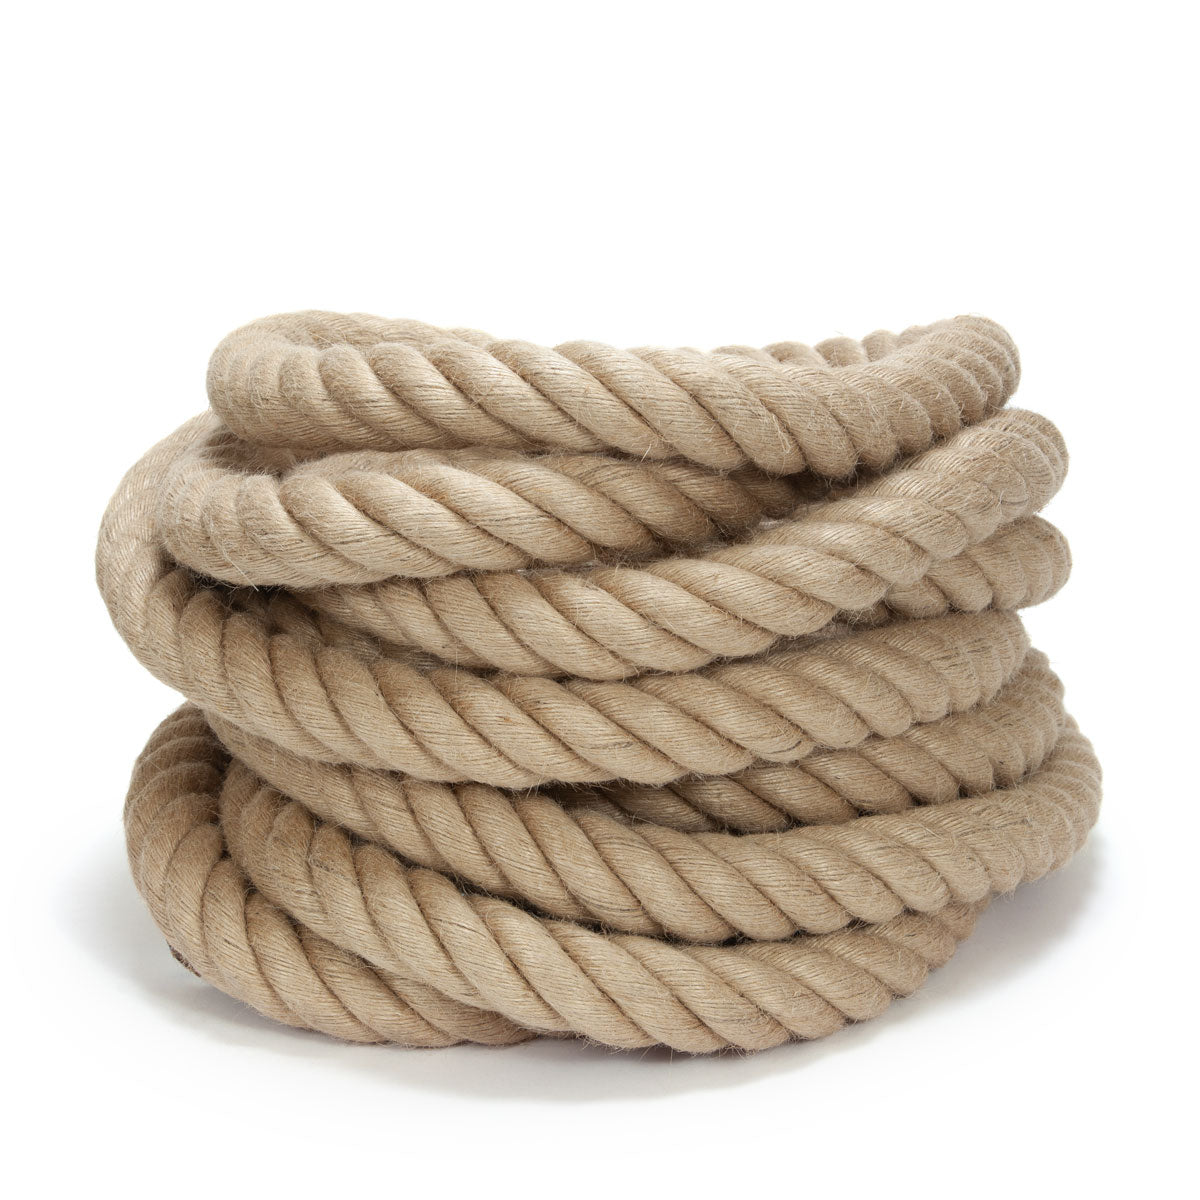 Jute Rope — Knot & Rope Supply